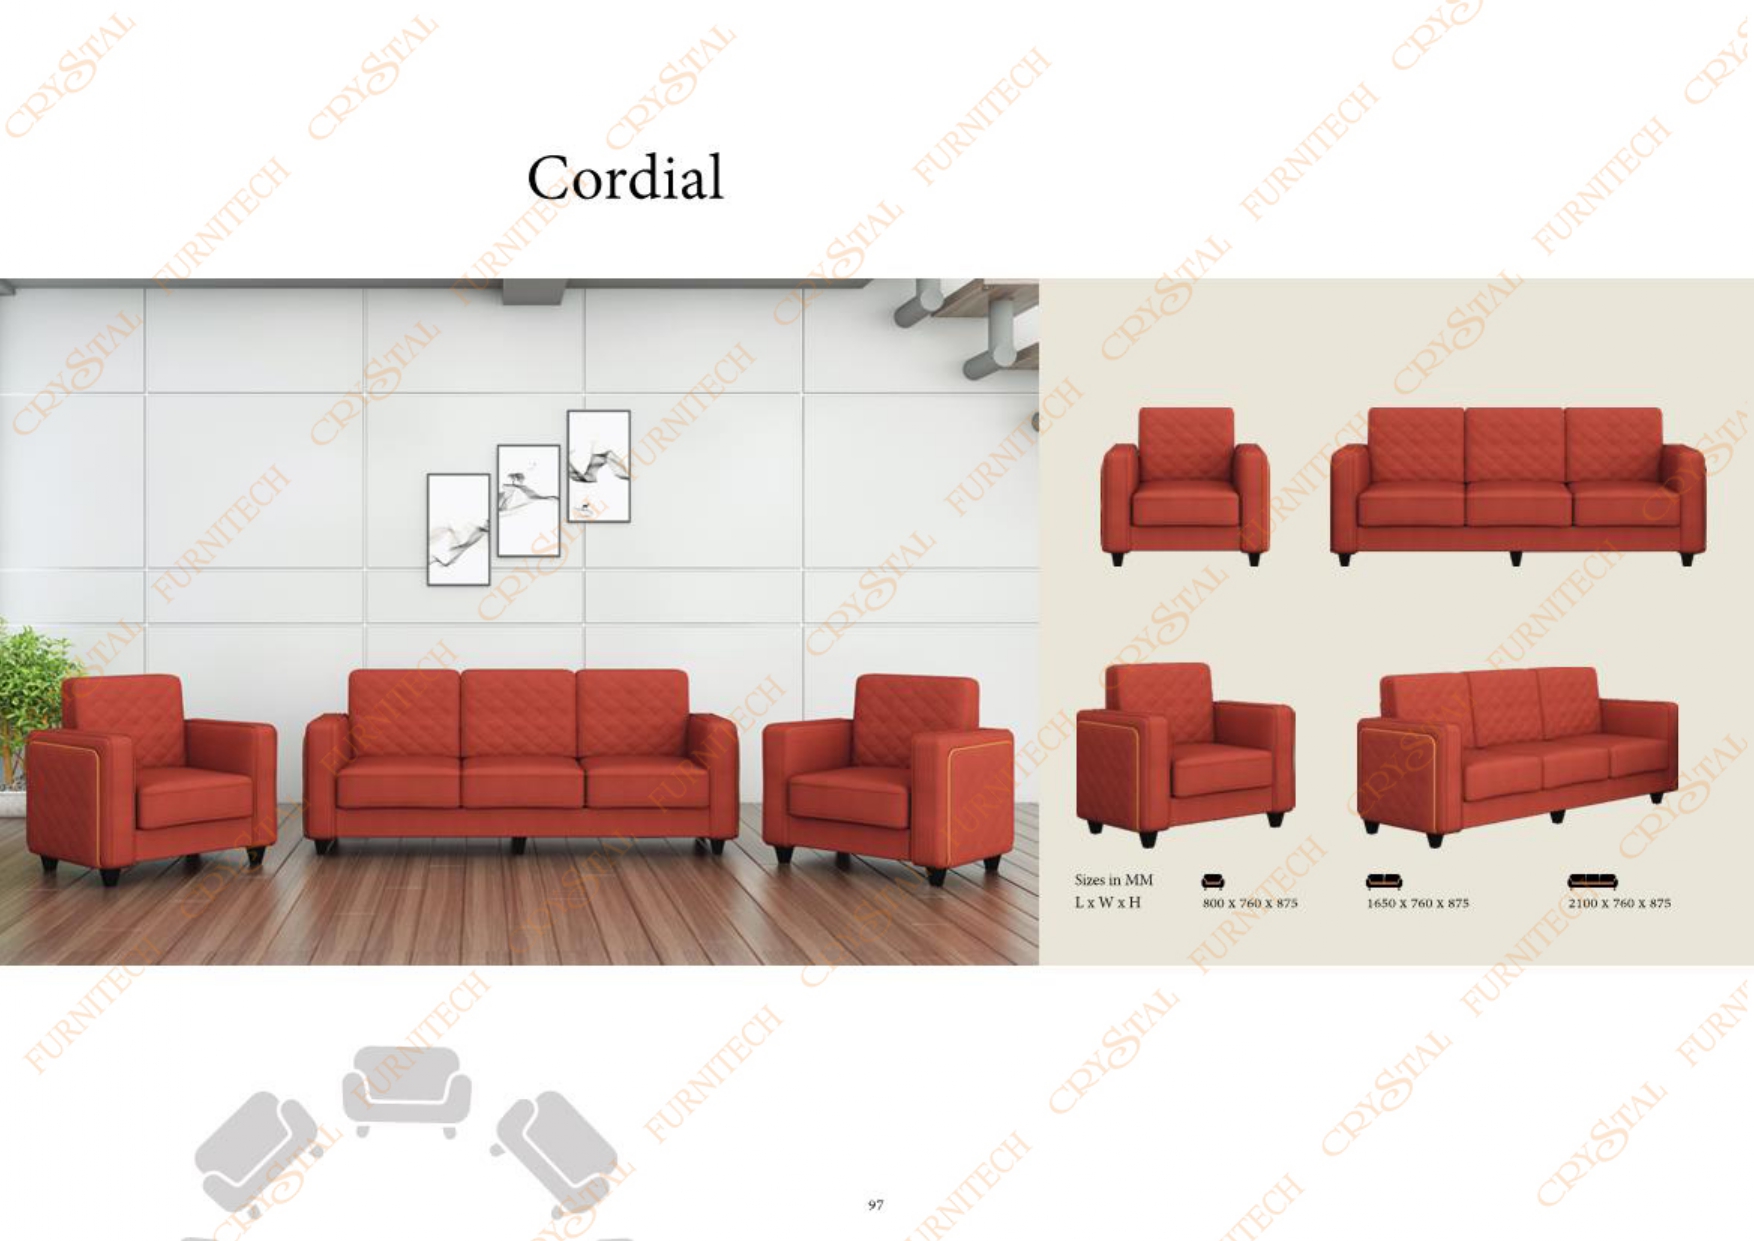 Cordial Sofa Set